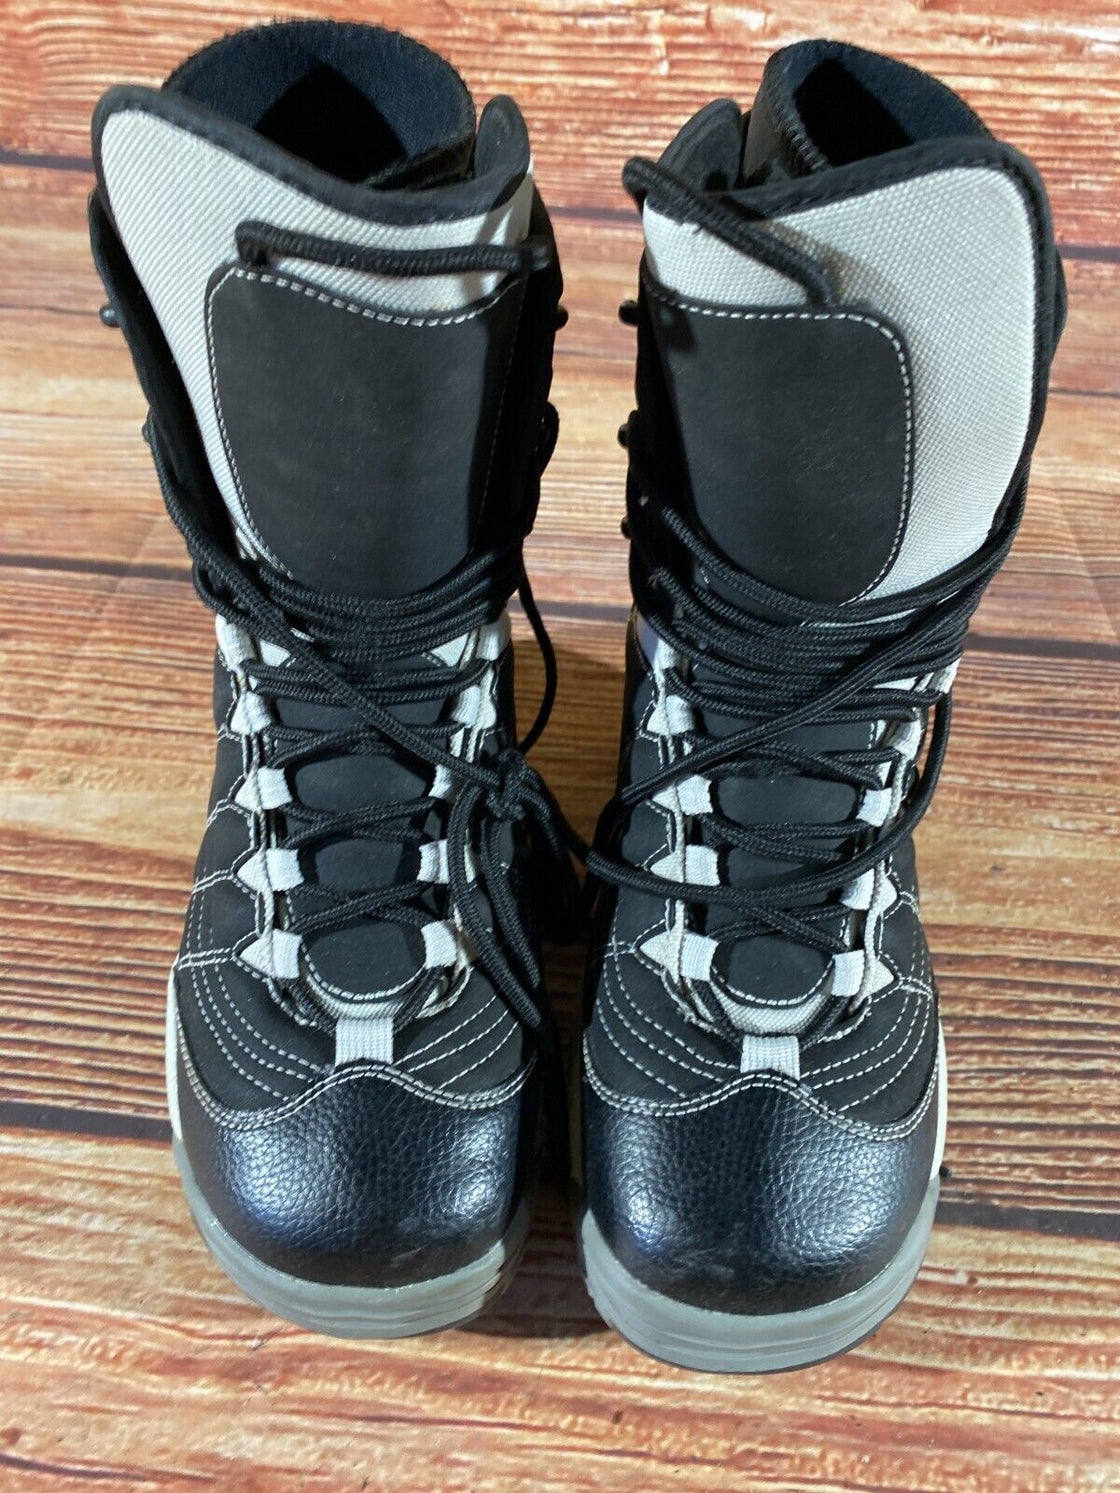 AERG GEAR Snowboard Boots Size EU42, US9, UK8, Mondo 265 mm